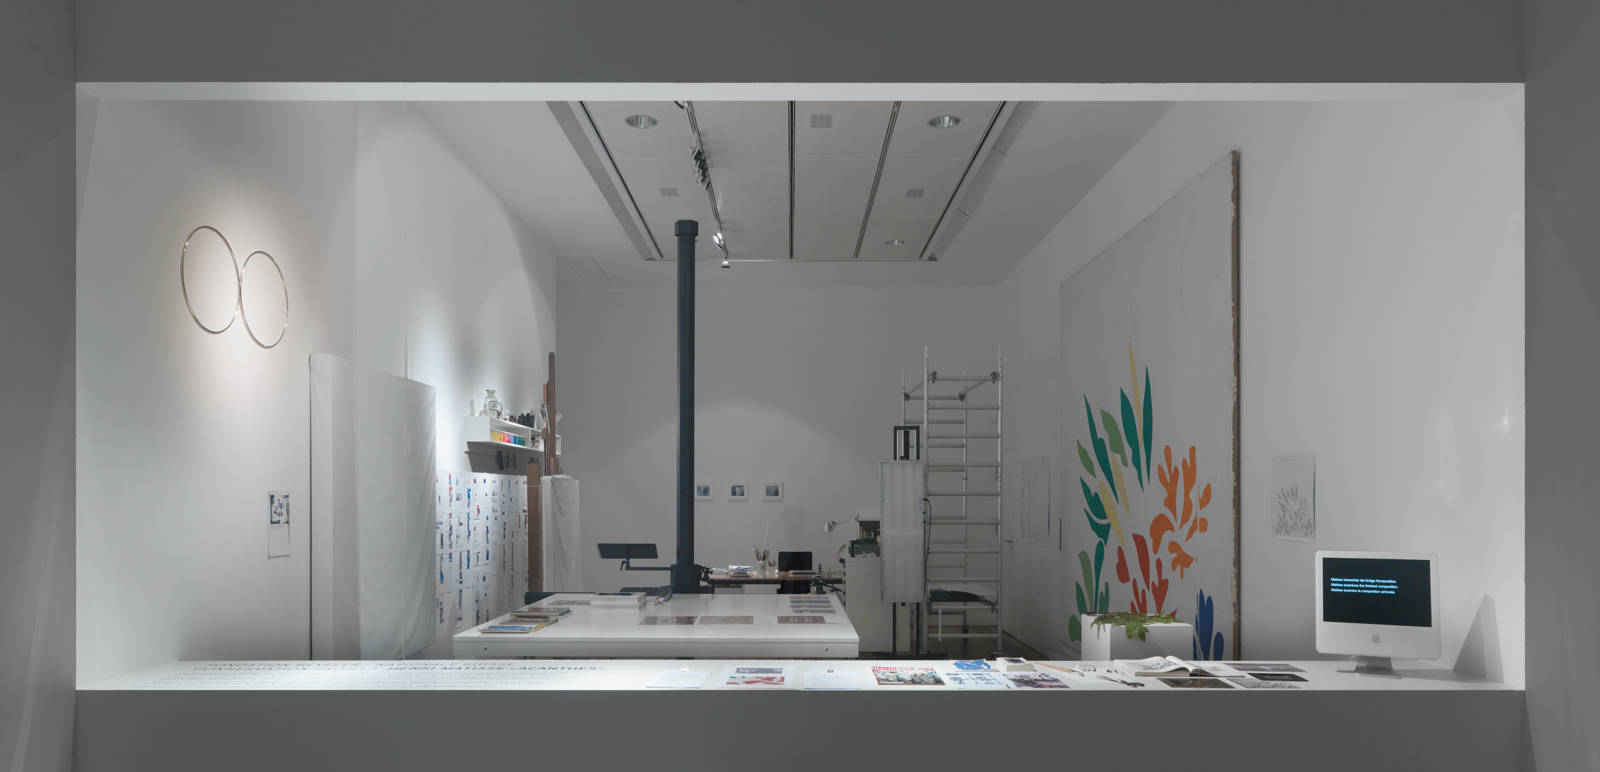 Felix Gonzales-Torres / Exhibition view, Fondation Beyeler, Riehen / 2010